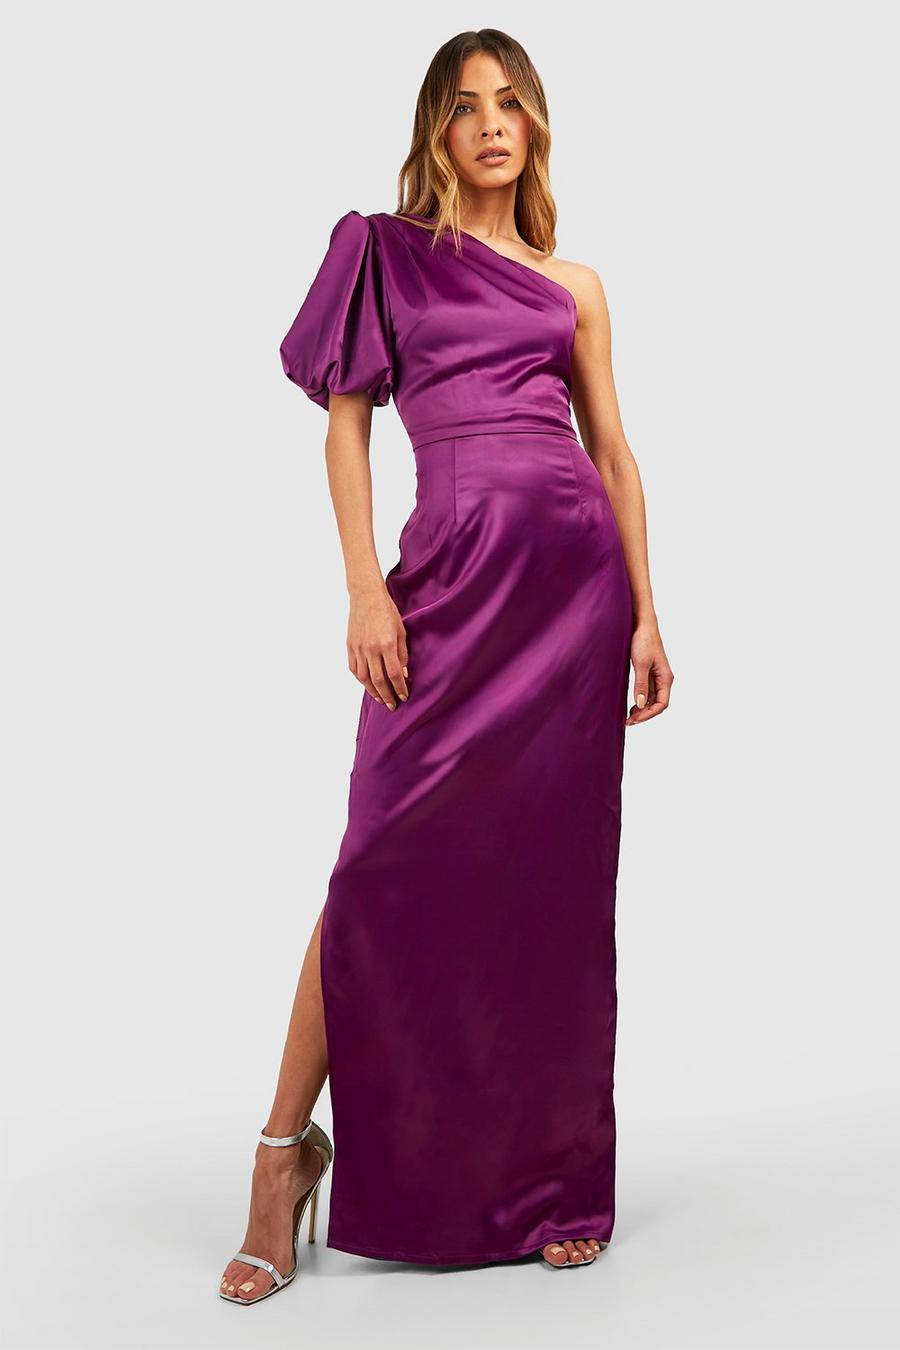 Jewel purple Satin Puff Sleeve Column Maxi Dress image number 1